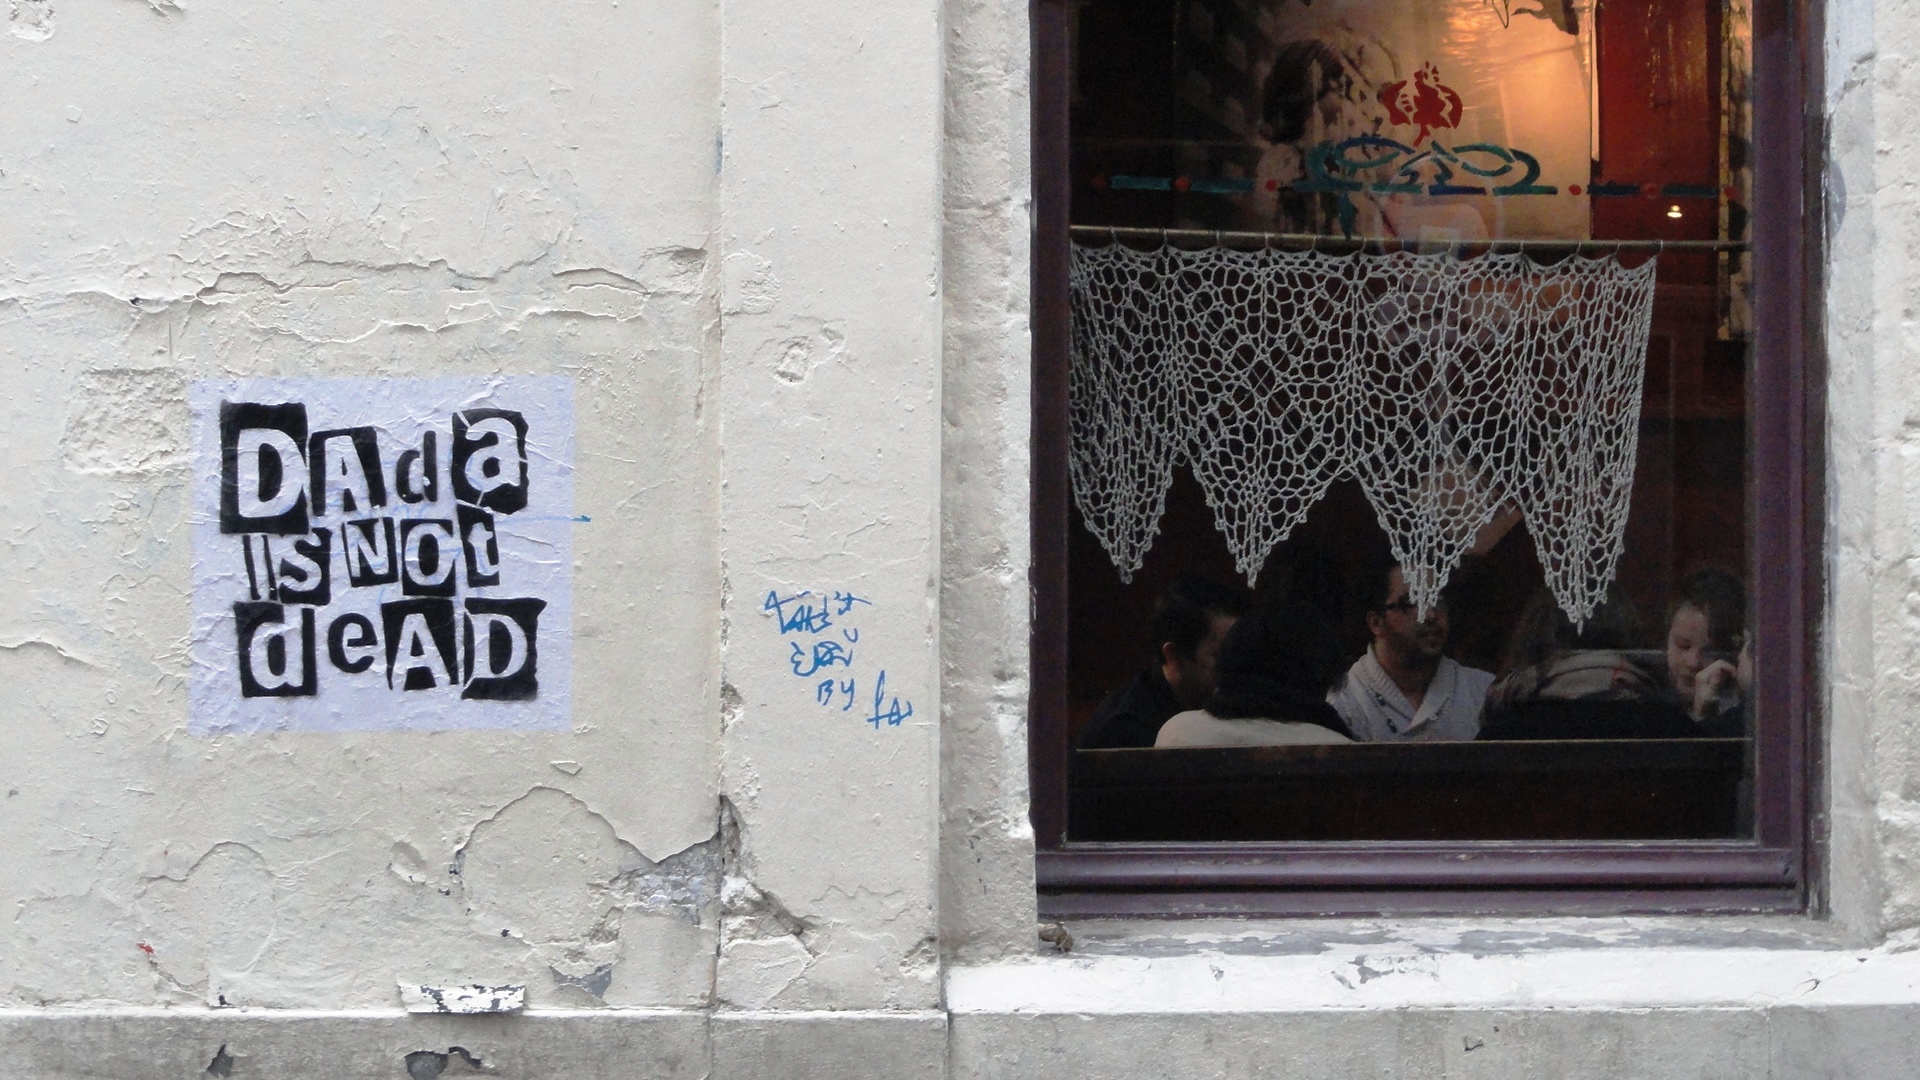 Vieux Lille - "Dadai not dead"